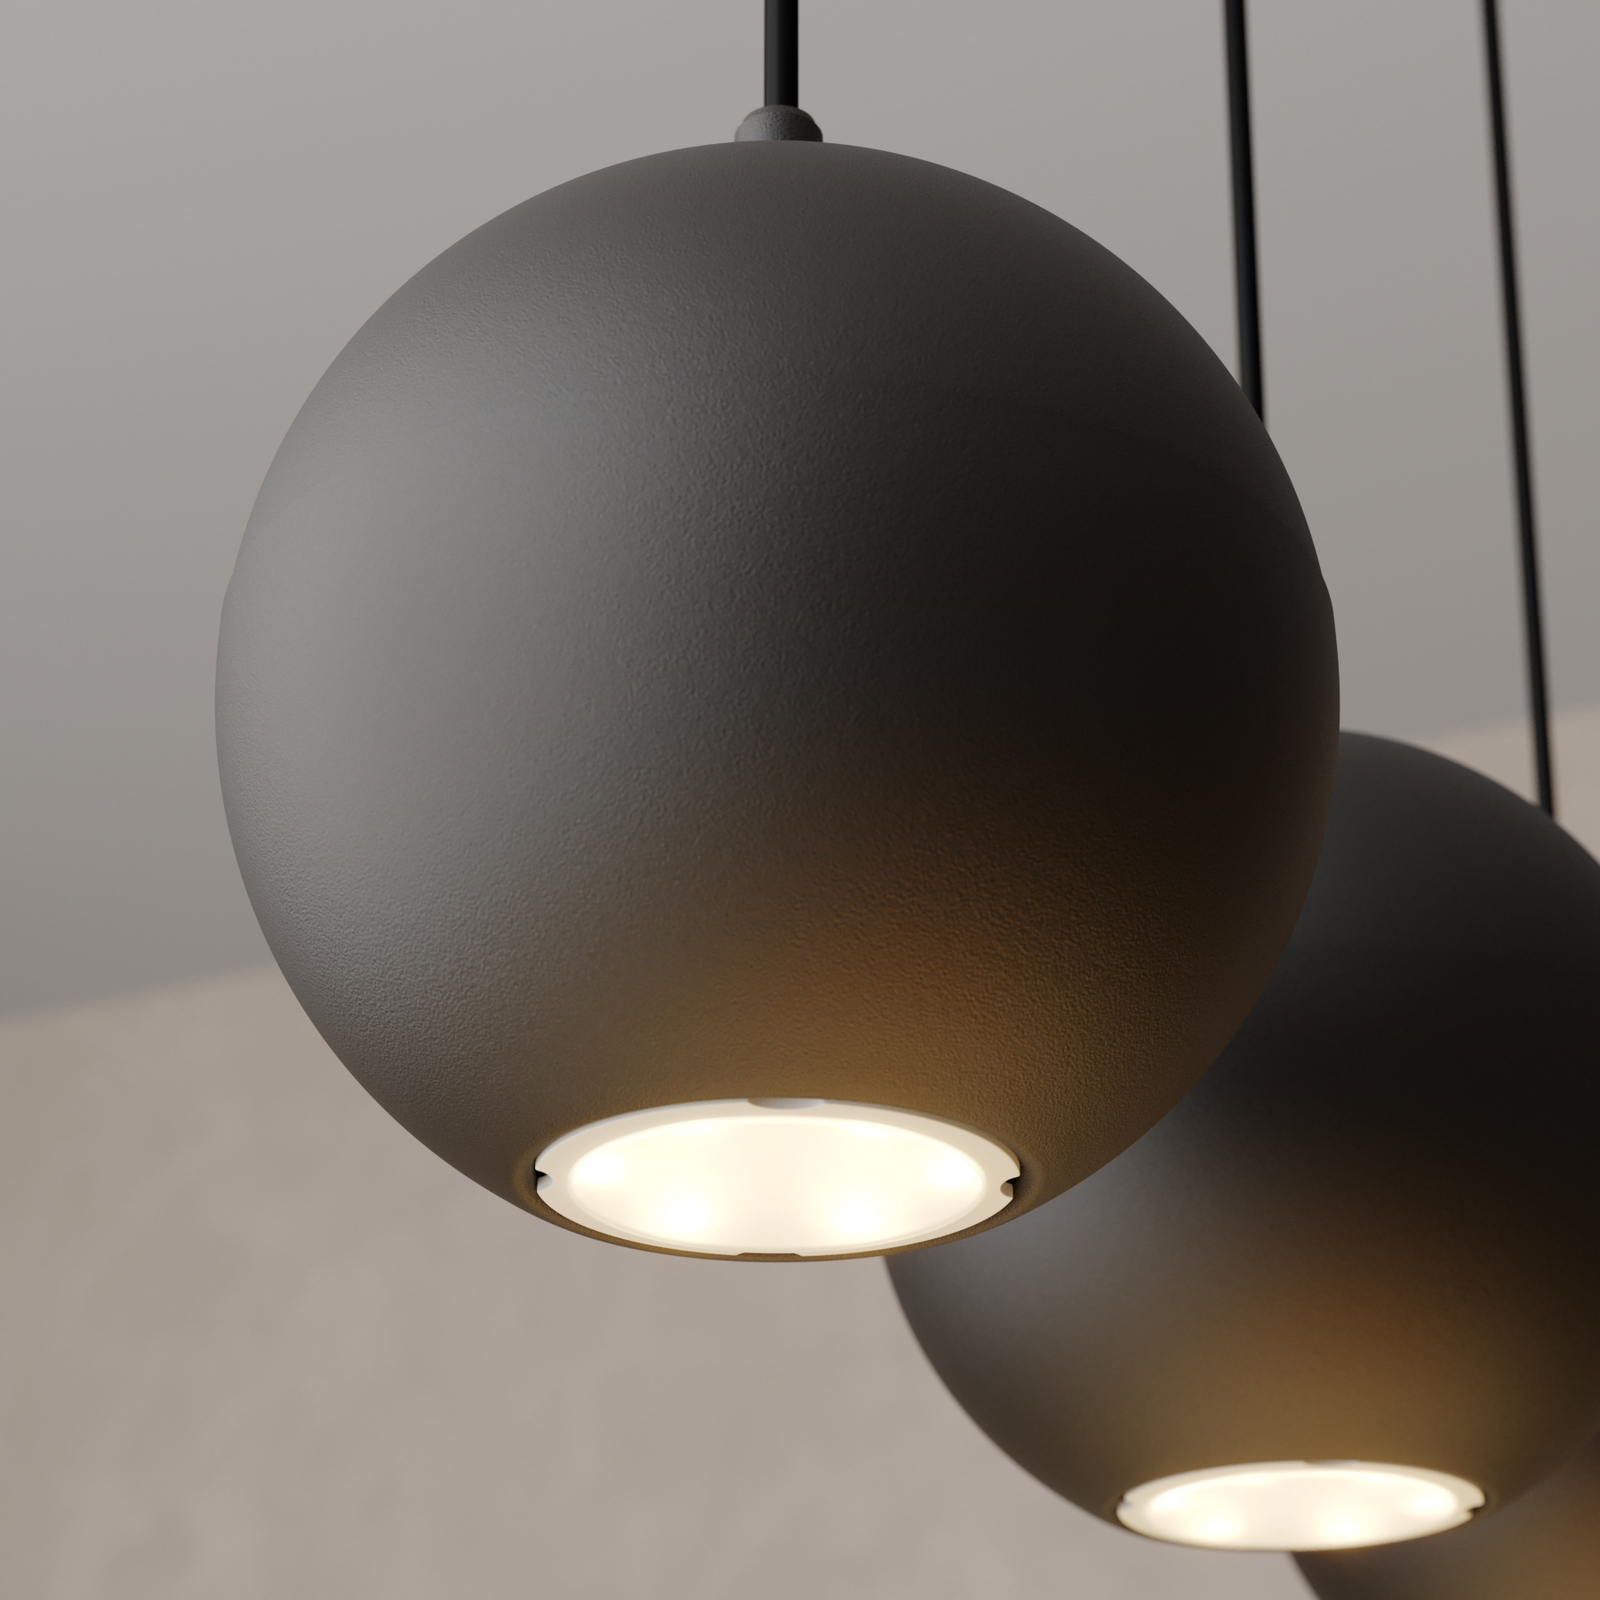 Midnight hanglamp in zwart 4-lamps lang